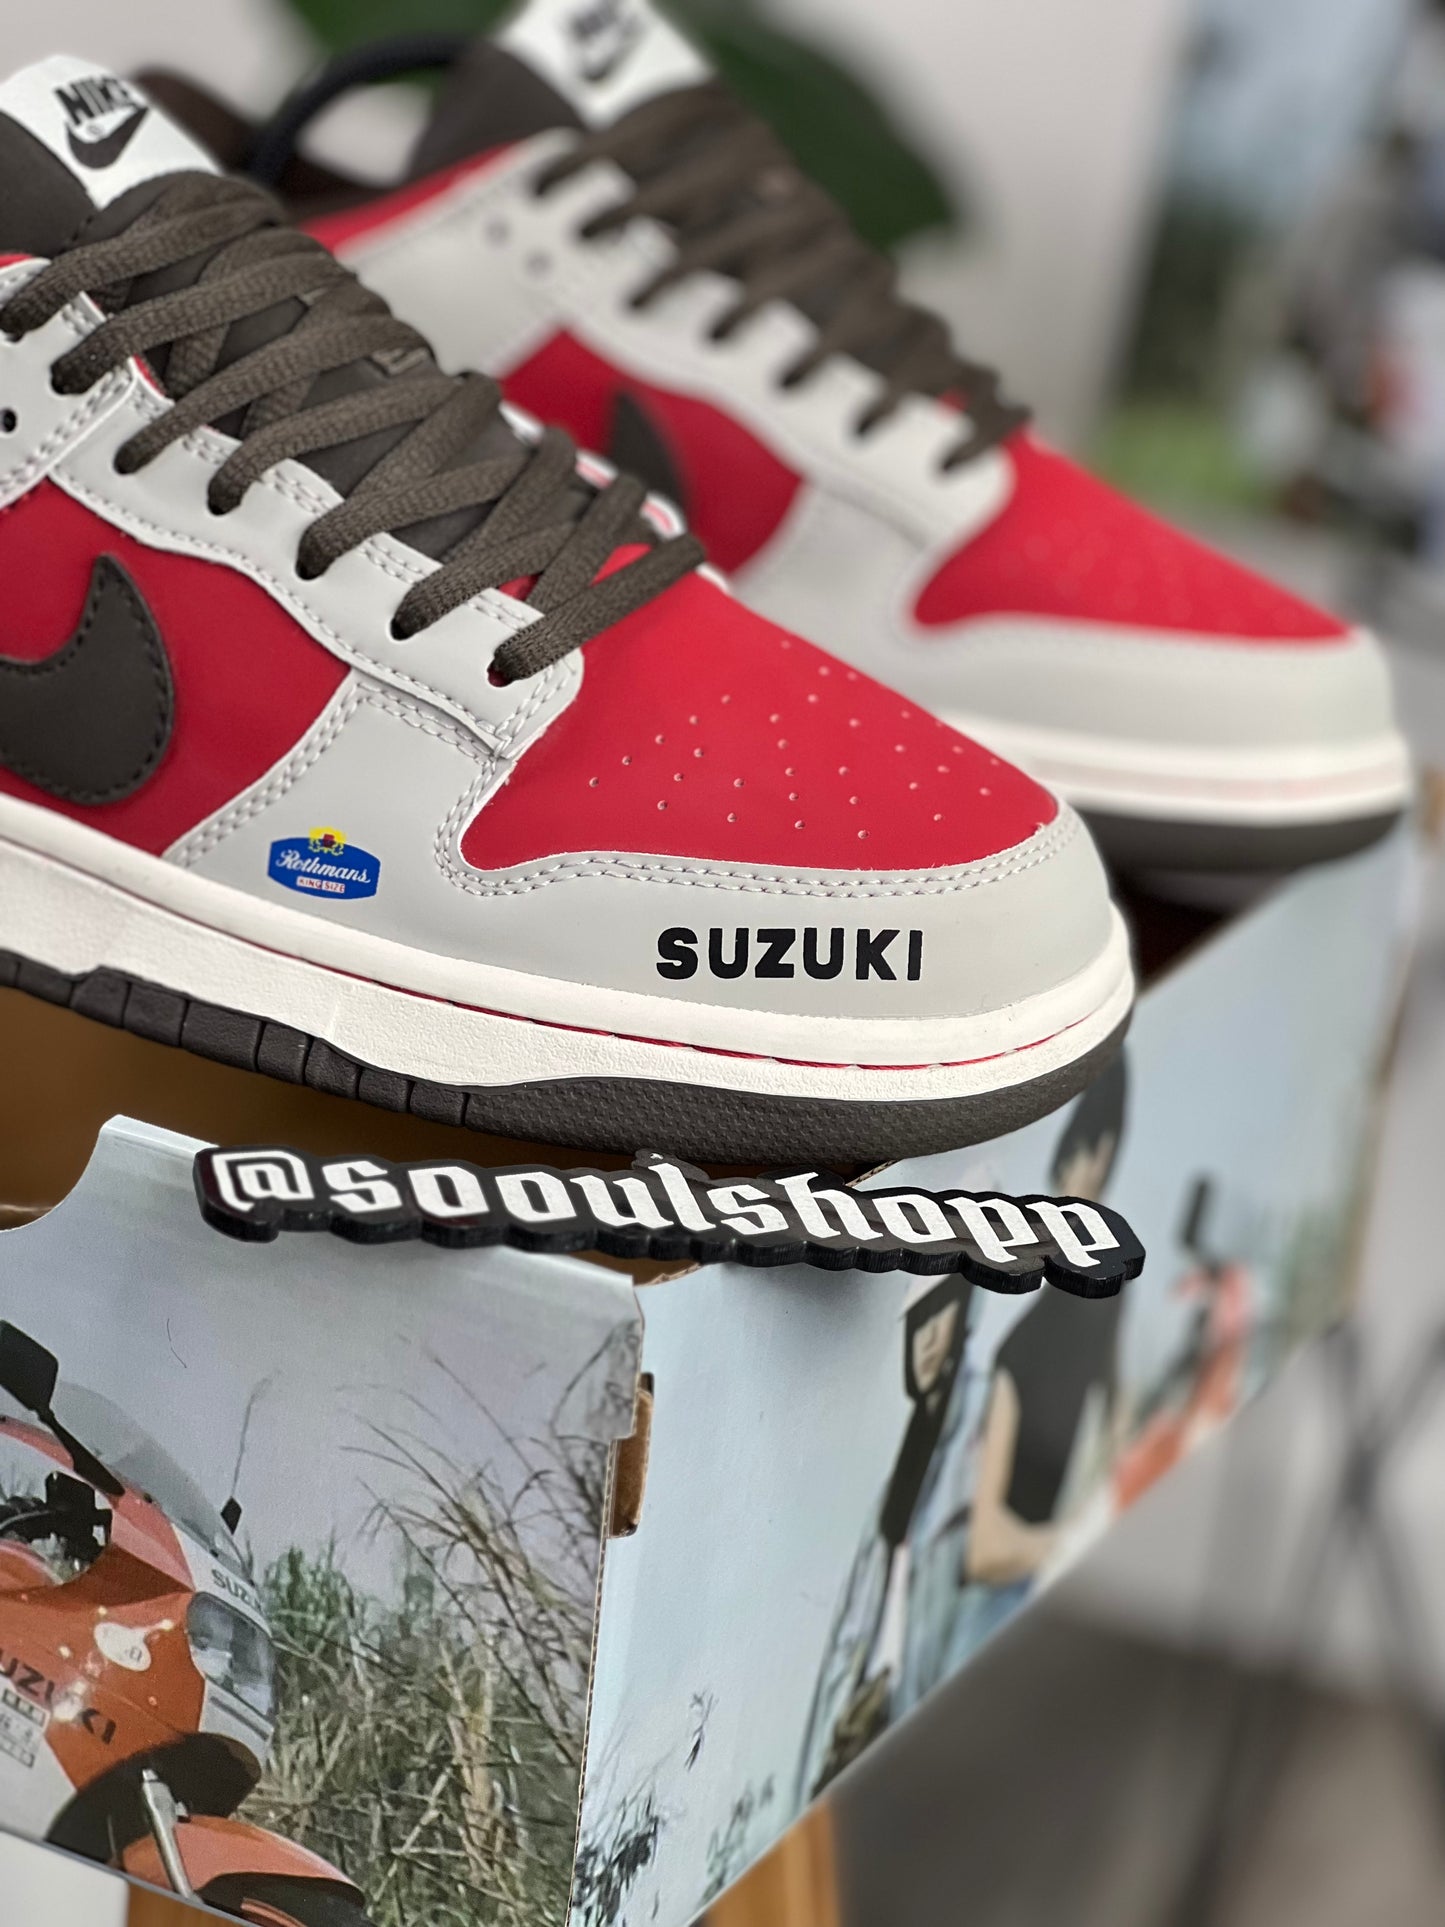 Nike Dunk Suzuki